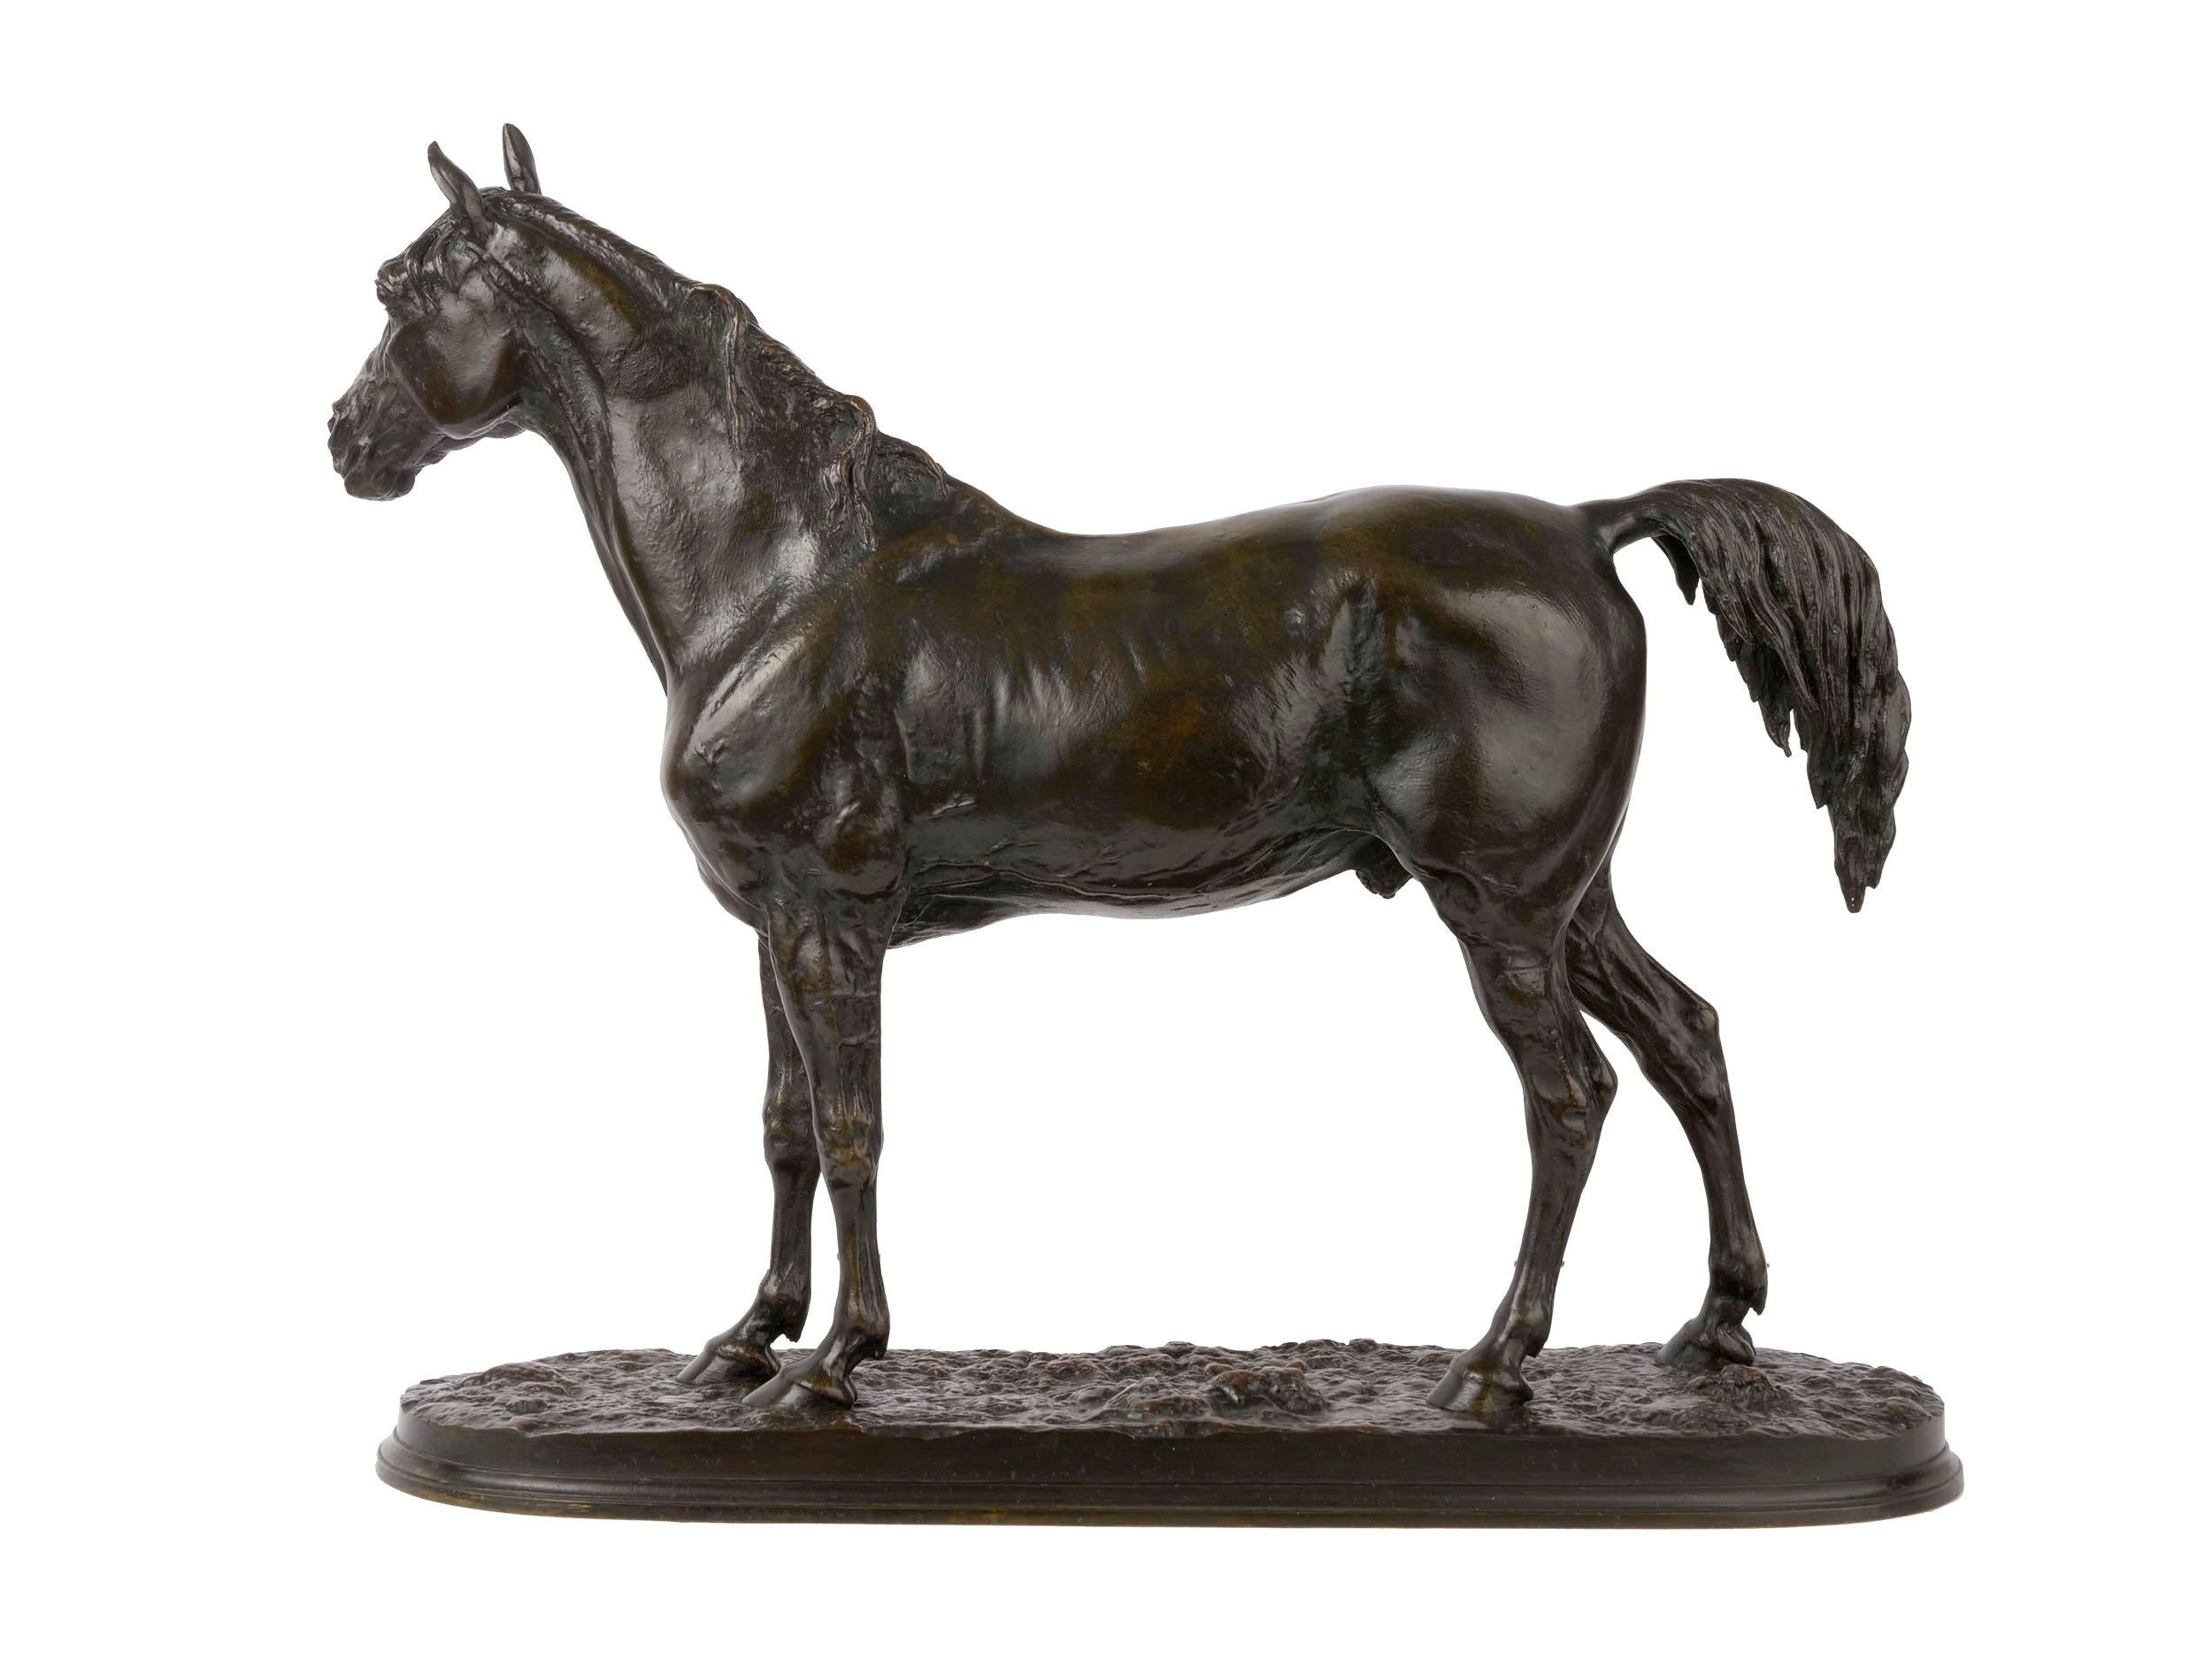 19th Century French Antique Bronze Sculpture of Arabian Stallion “Ibrahim” after Pierre Jules